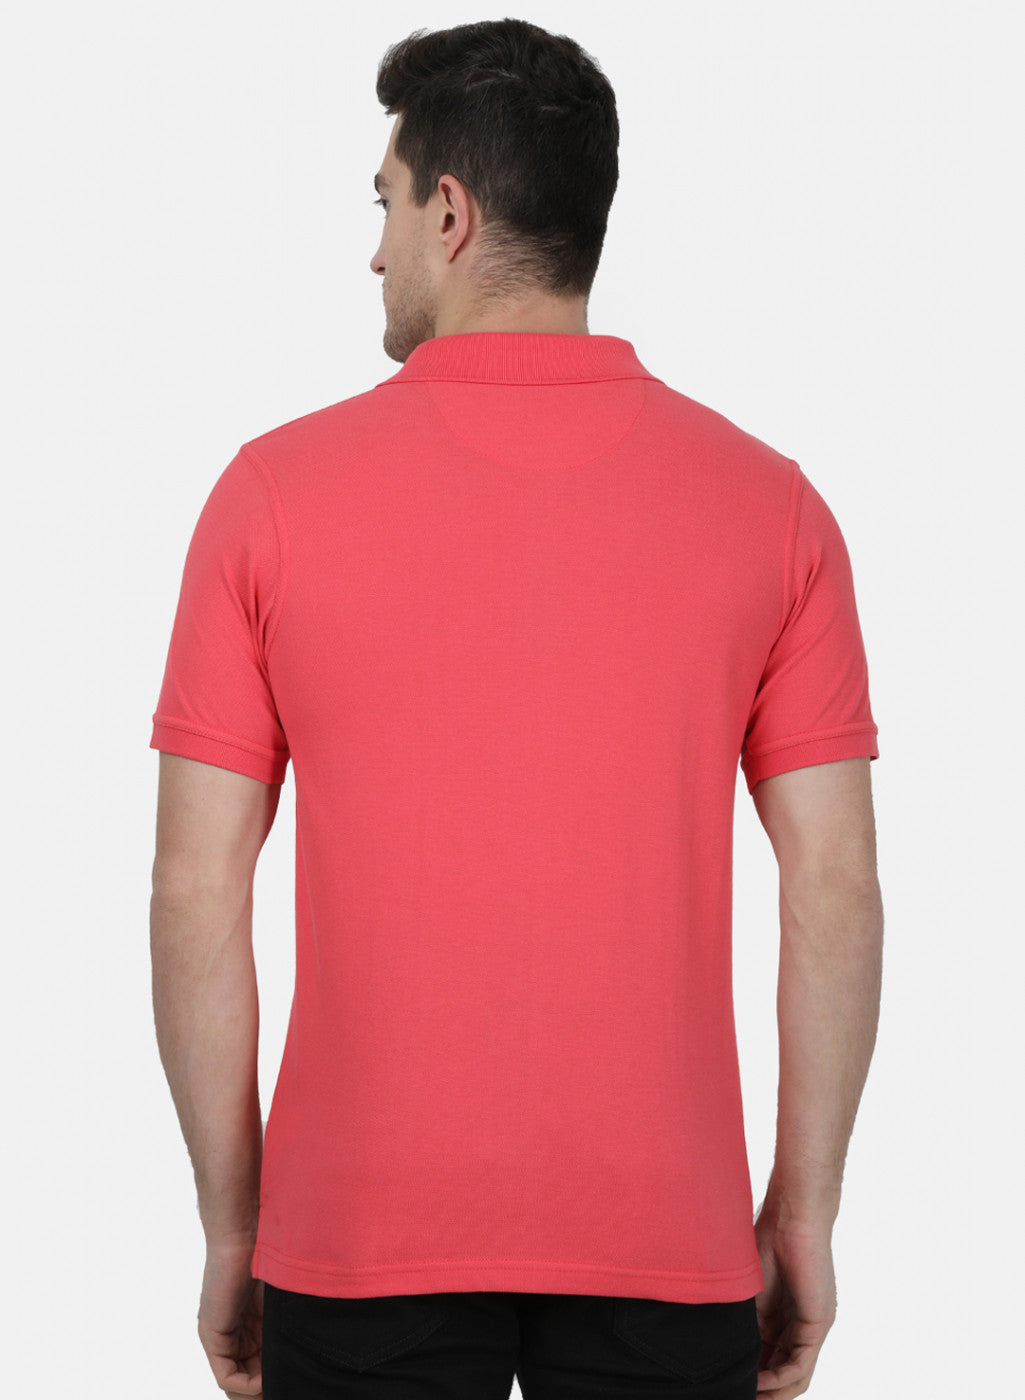 Mens Red Plain T-Shirt